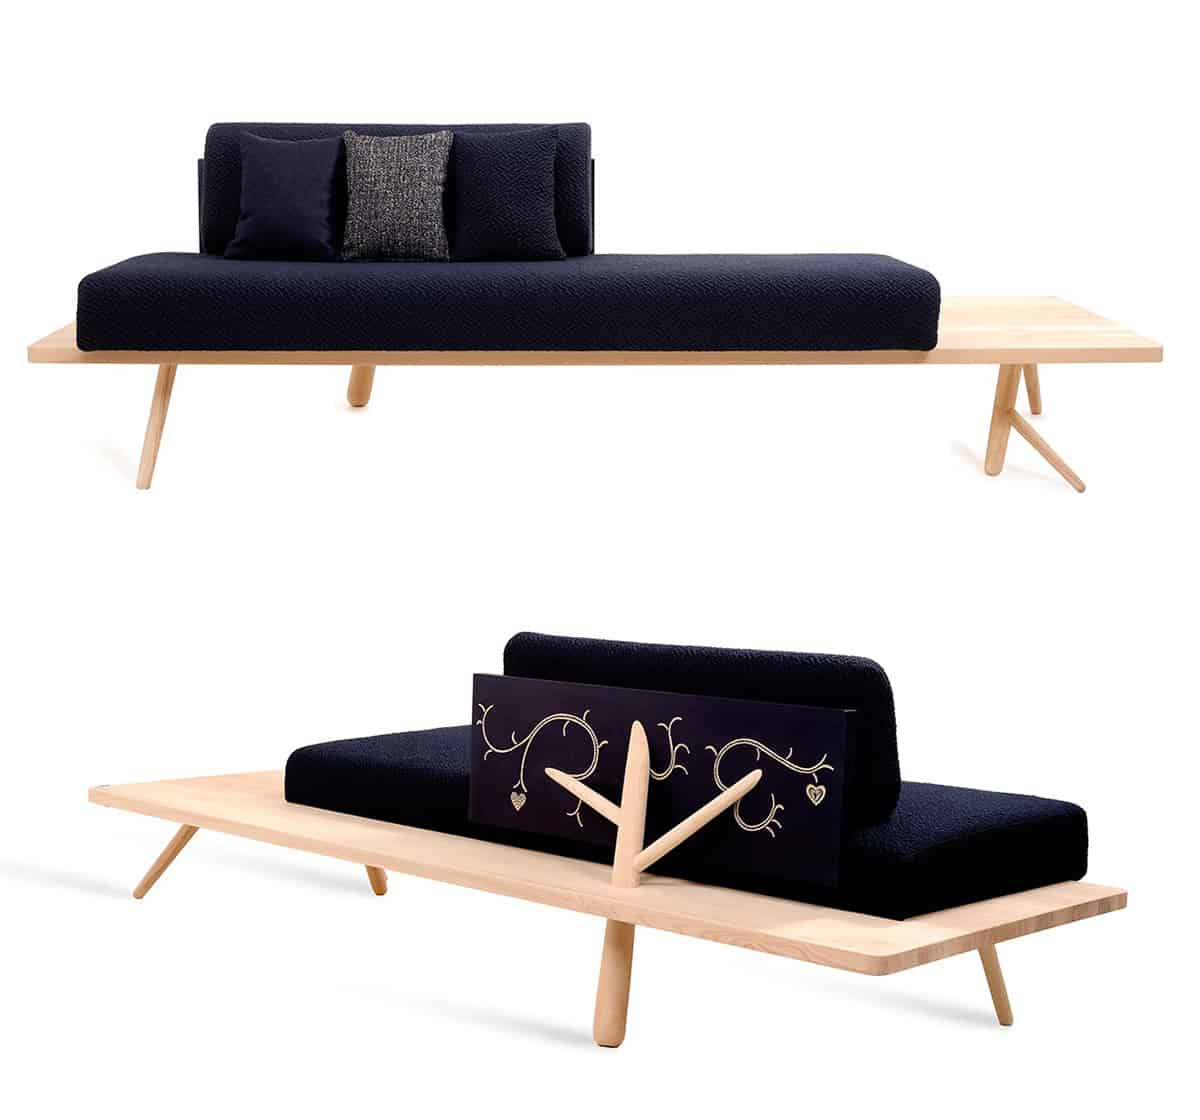 7 unusual sofas creative designs